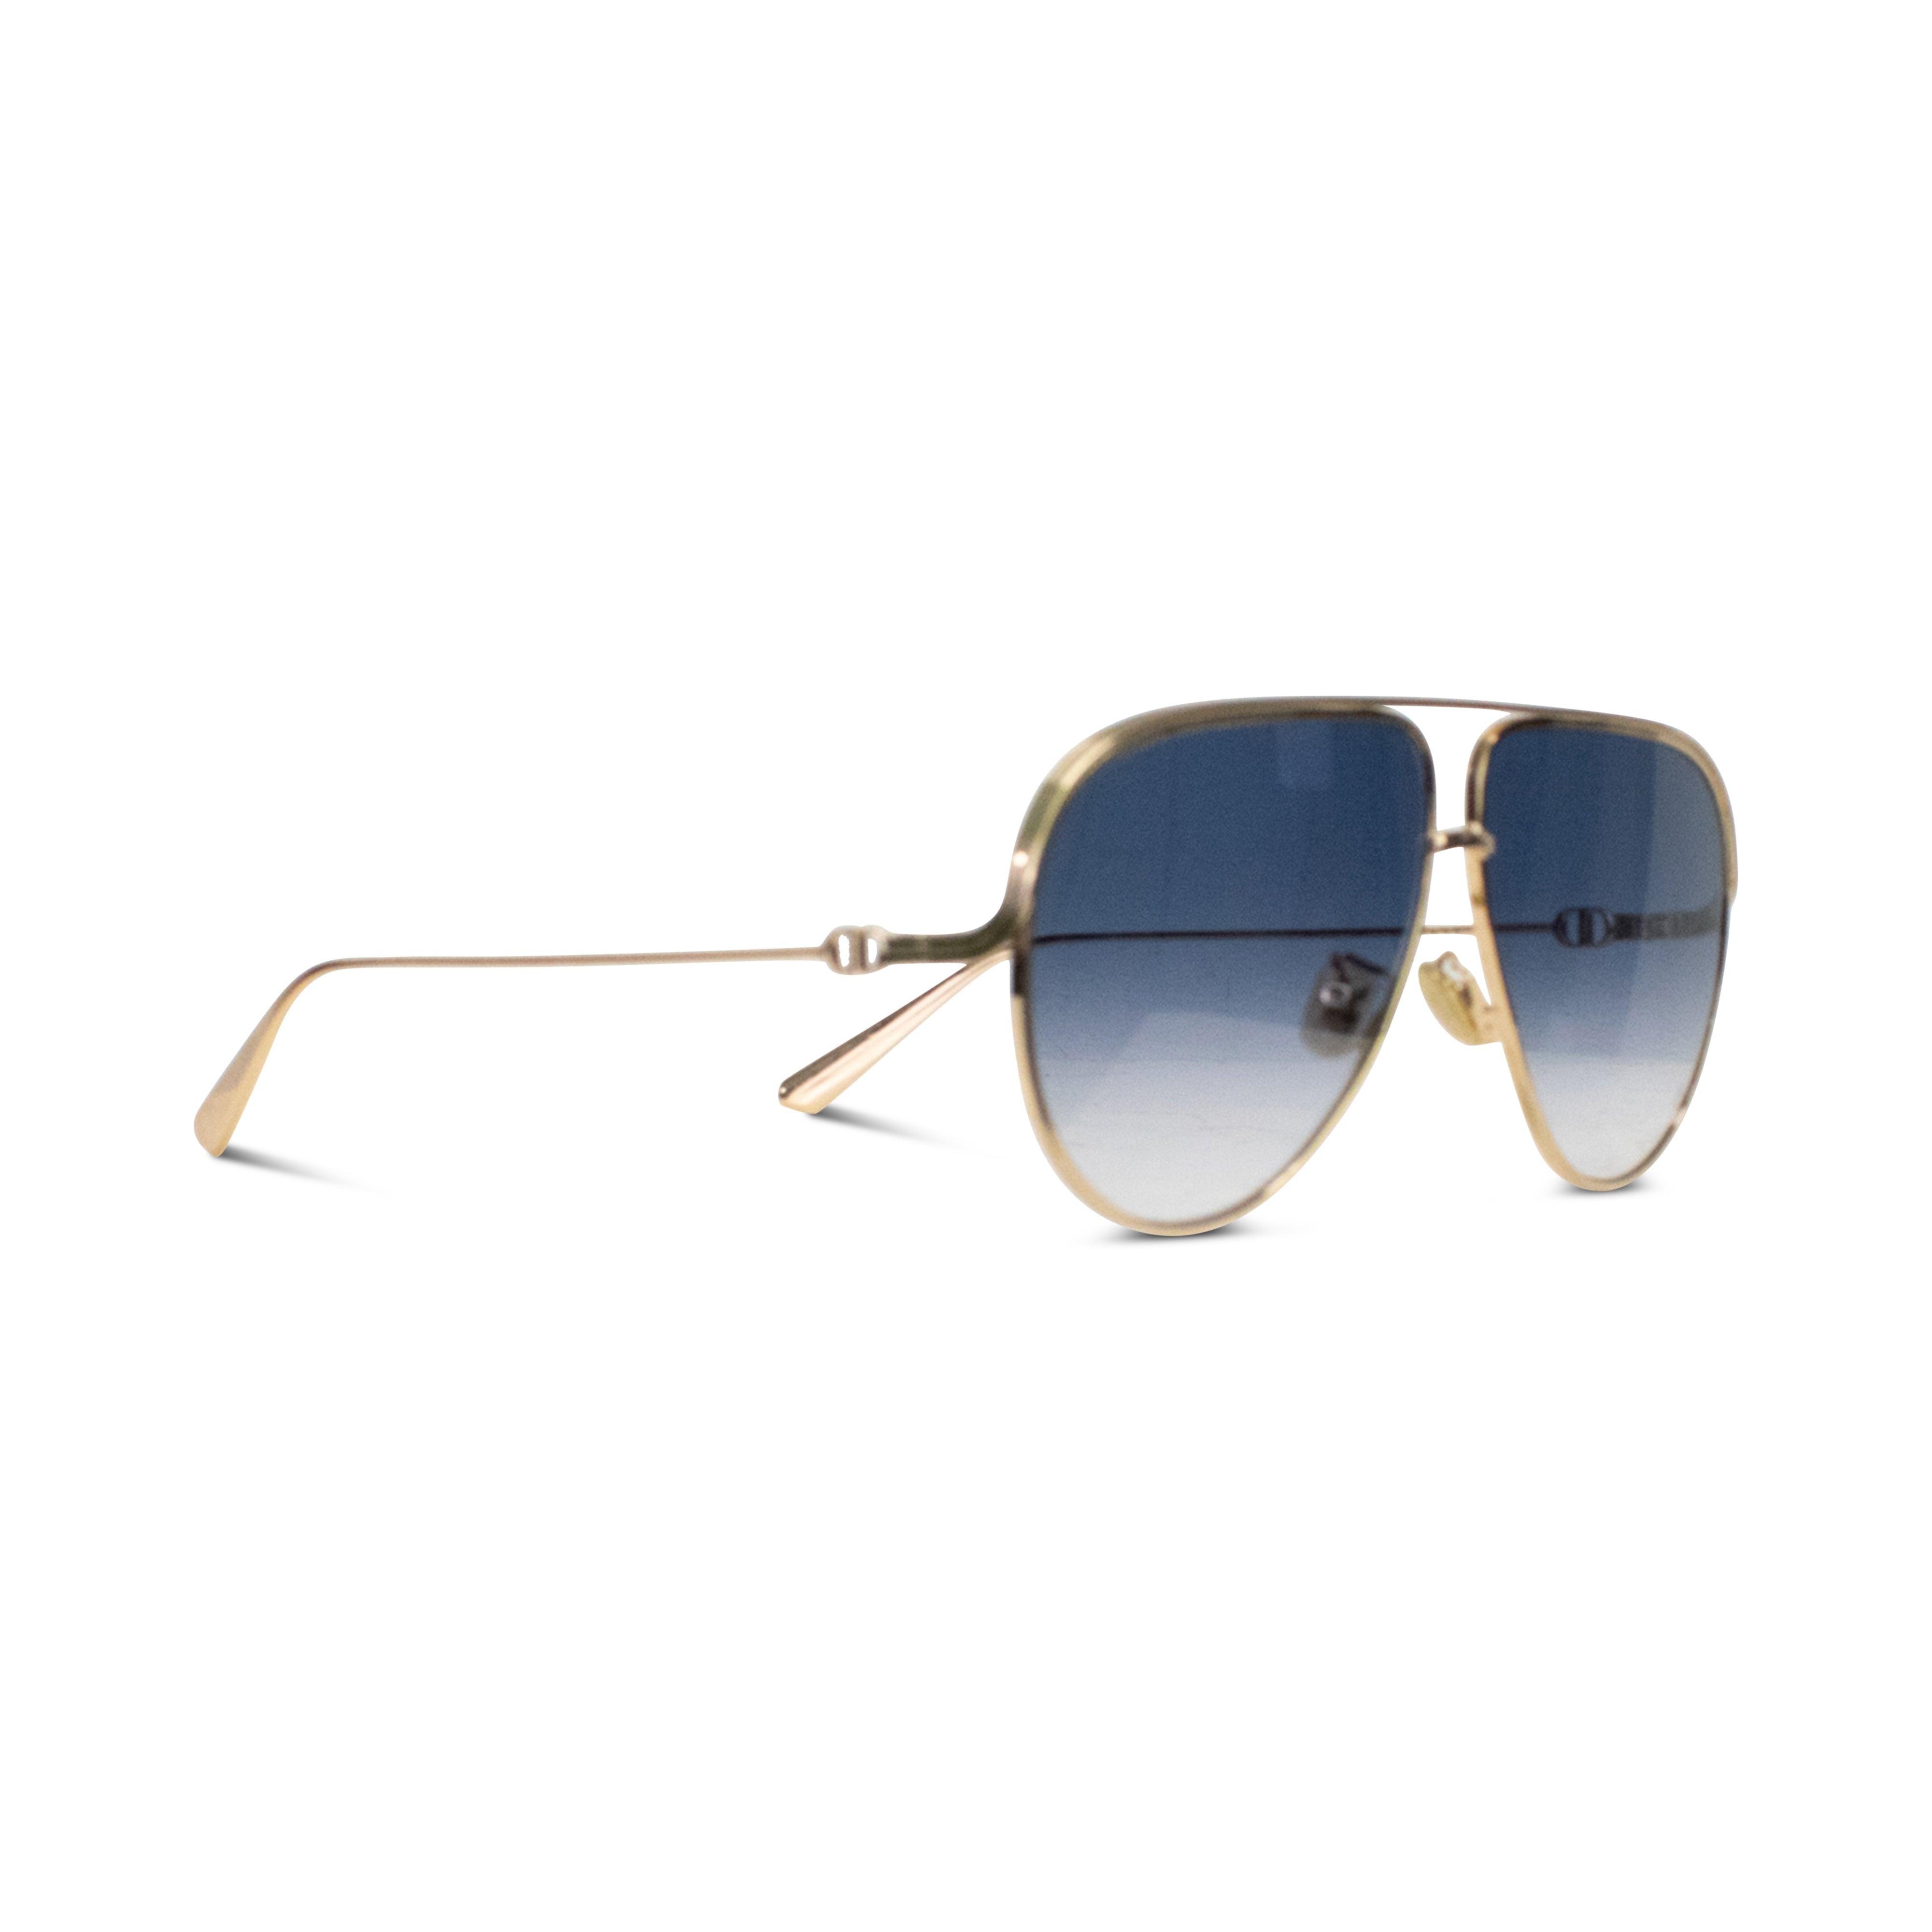 Christian Dior Aviator Sunglasses - Fashionably Yours